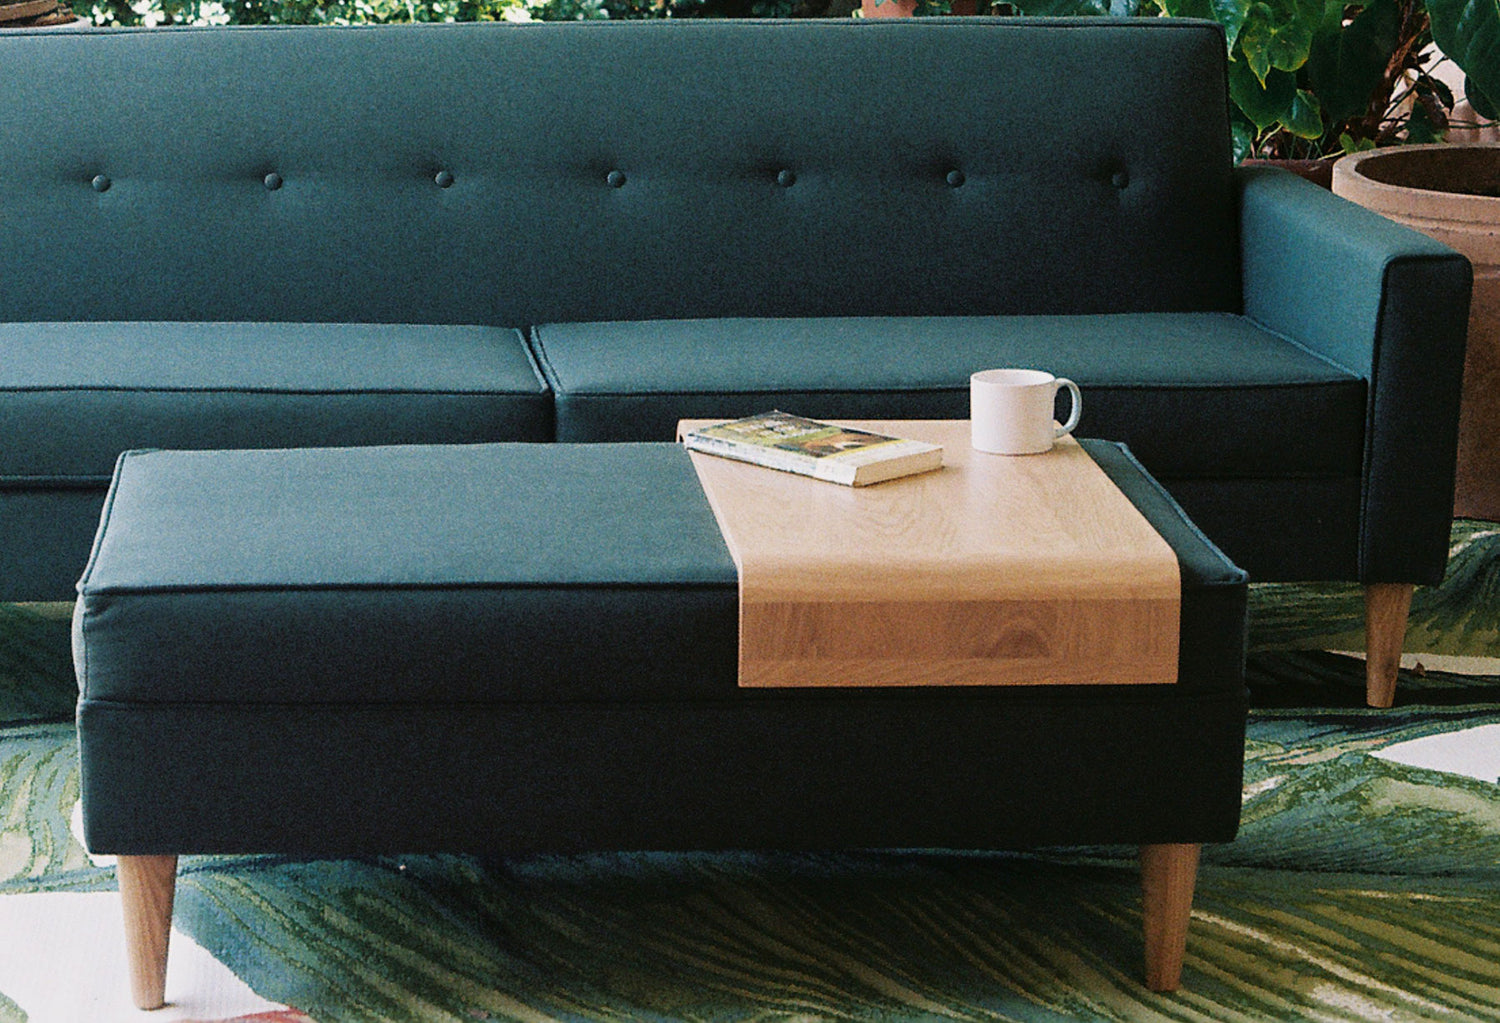 50s style sofa and ottoman